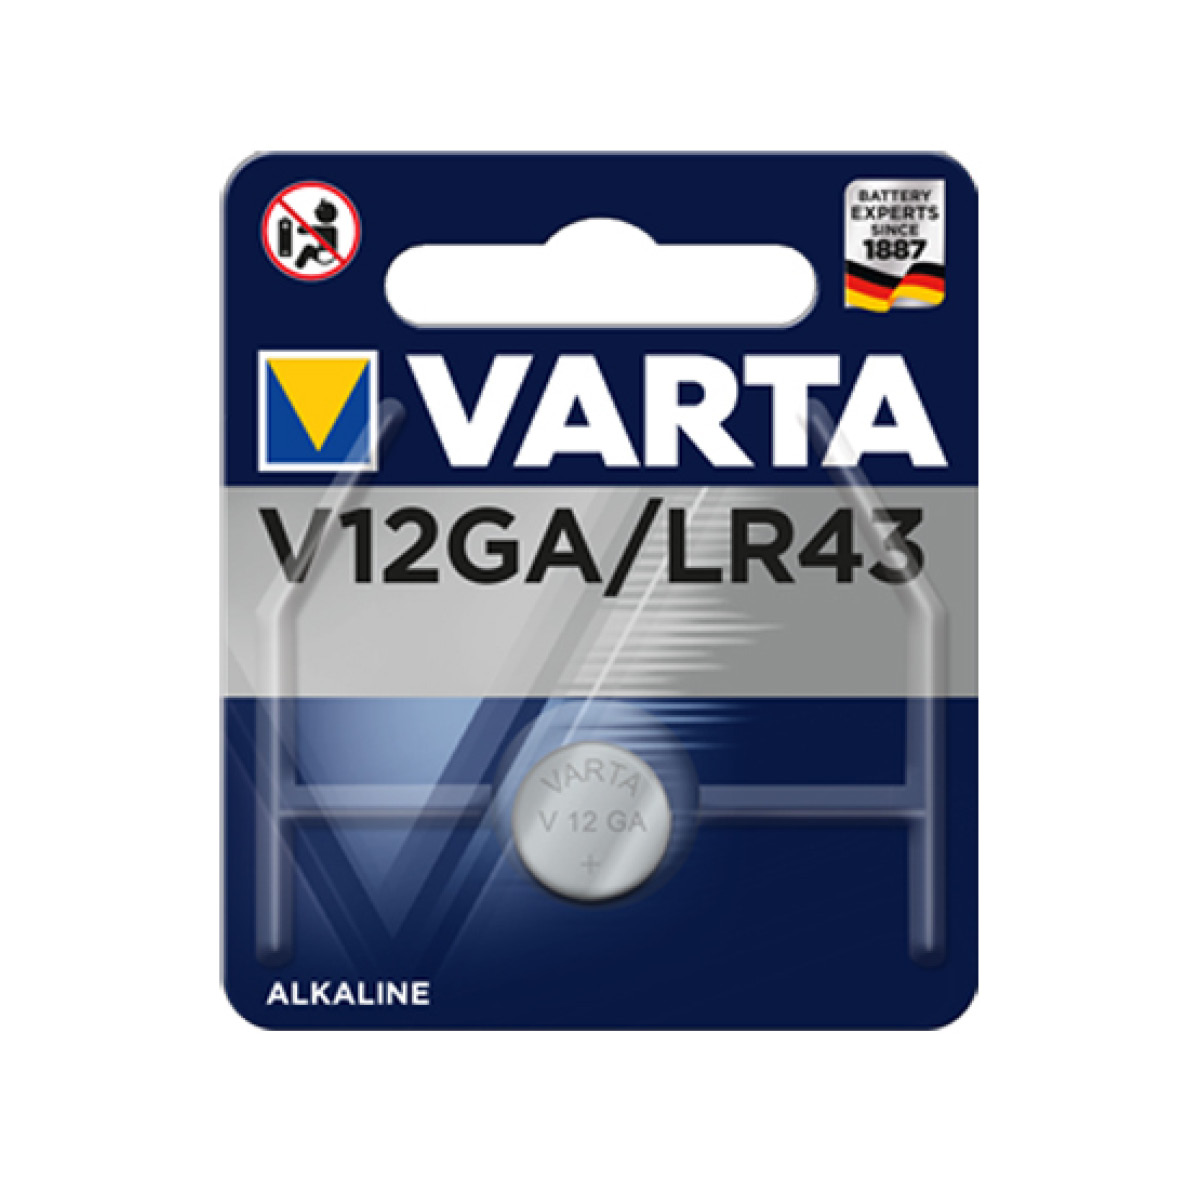 Varta Electronics V 12 GA Knopfzelle